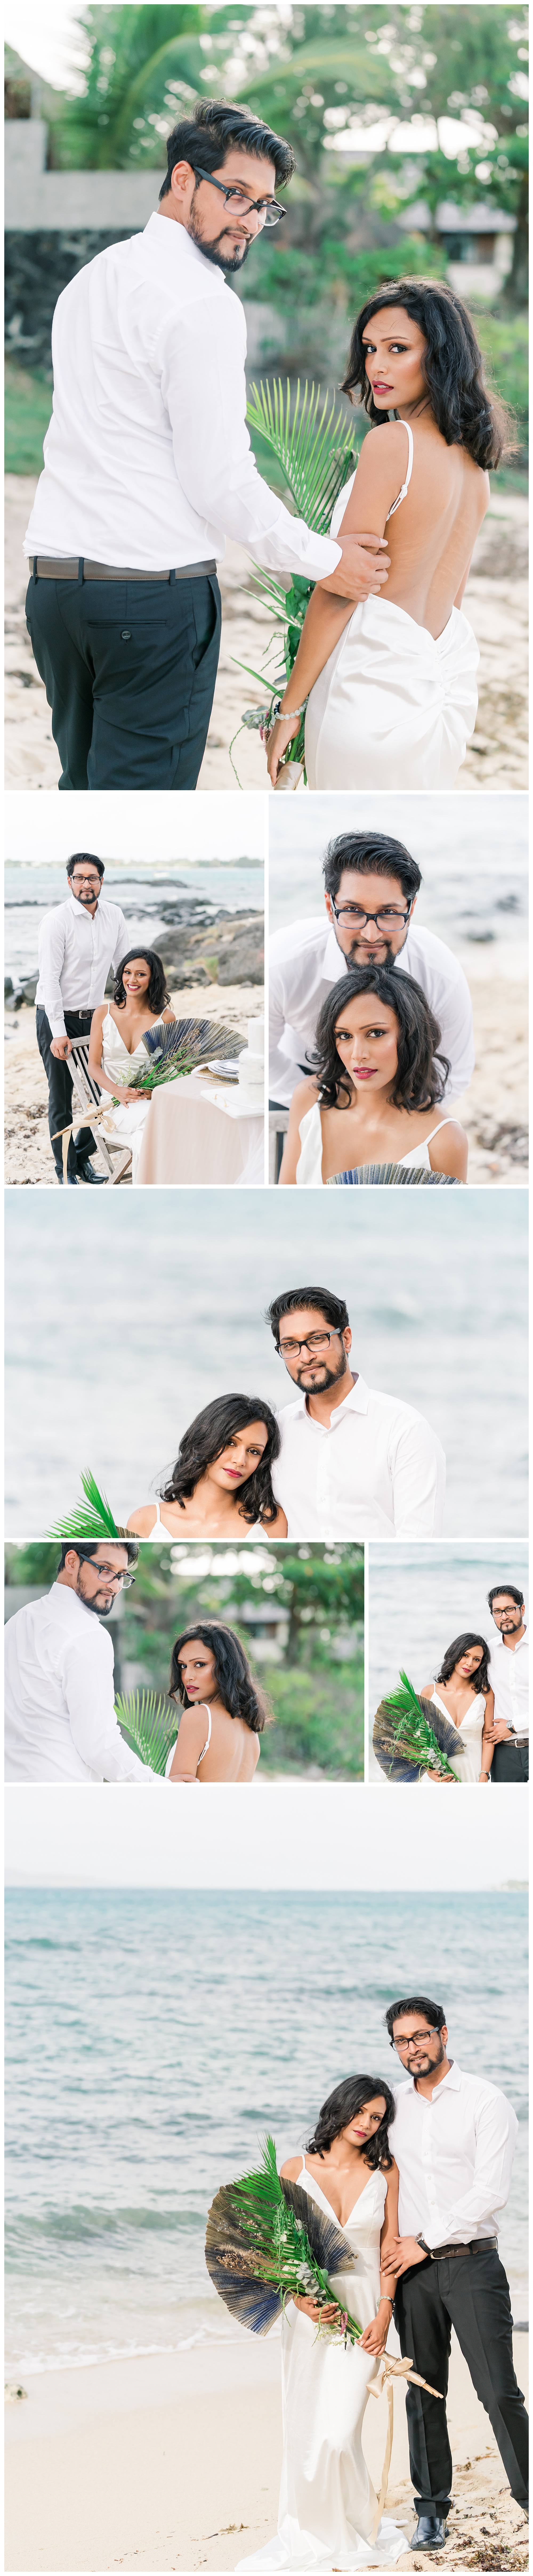 Island elopement photographer | Destination wedding